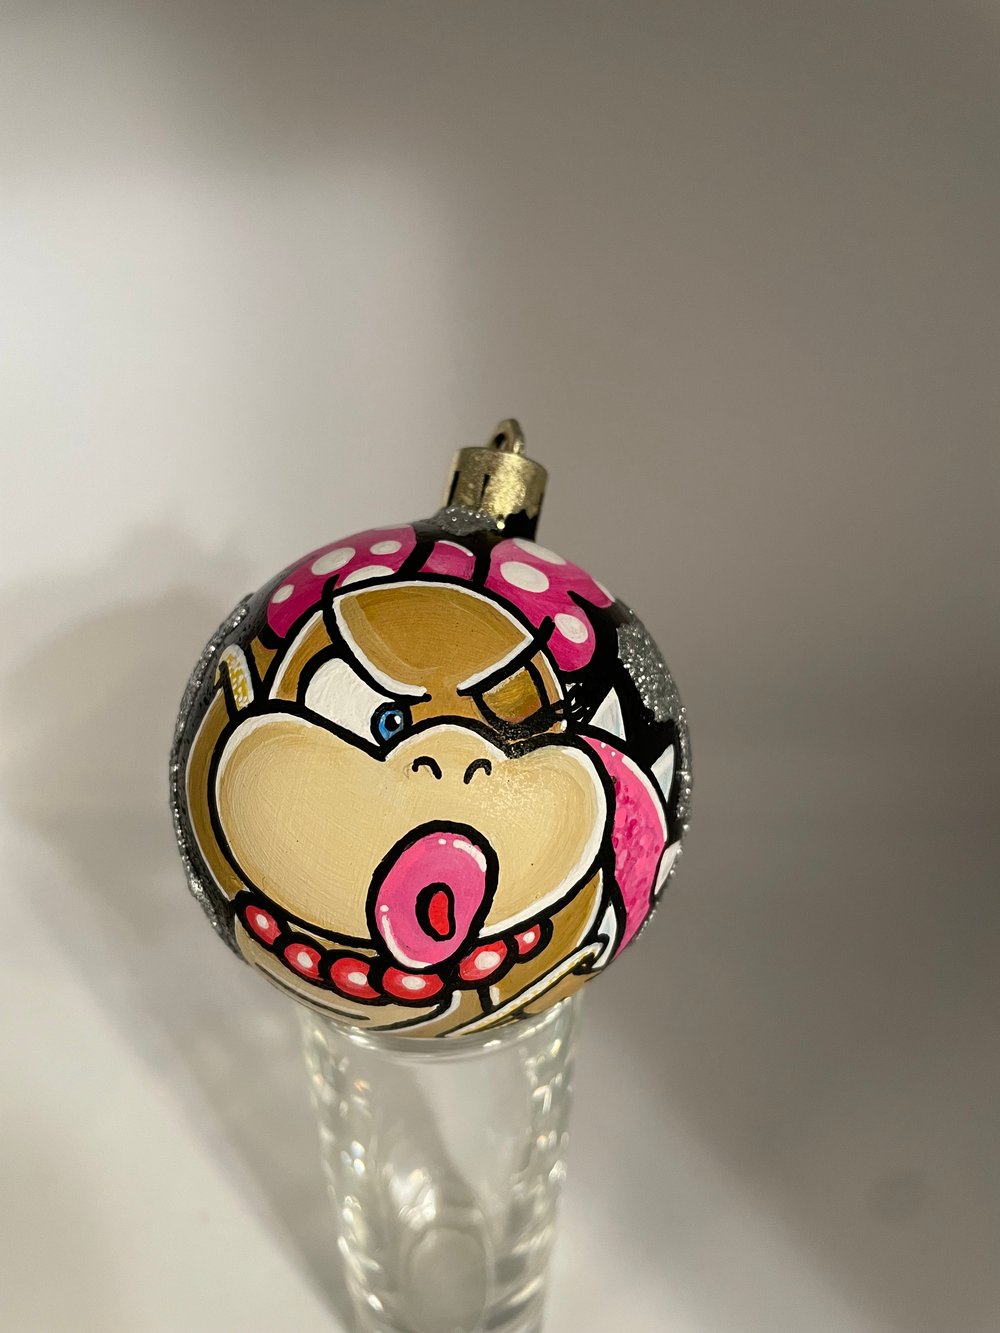 Mario Bro inspired ornaments 